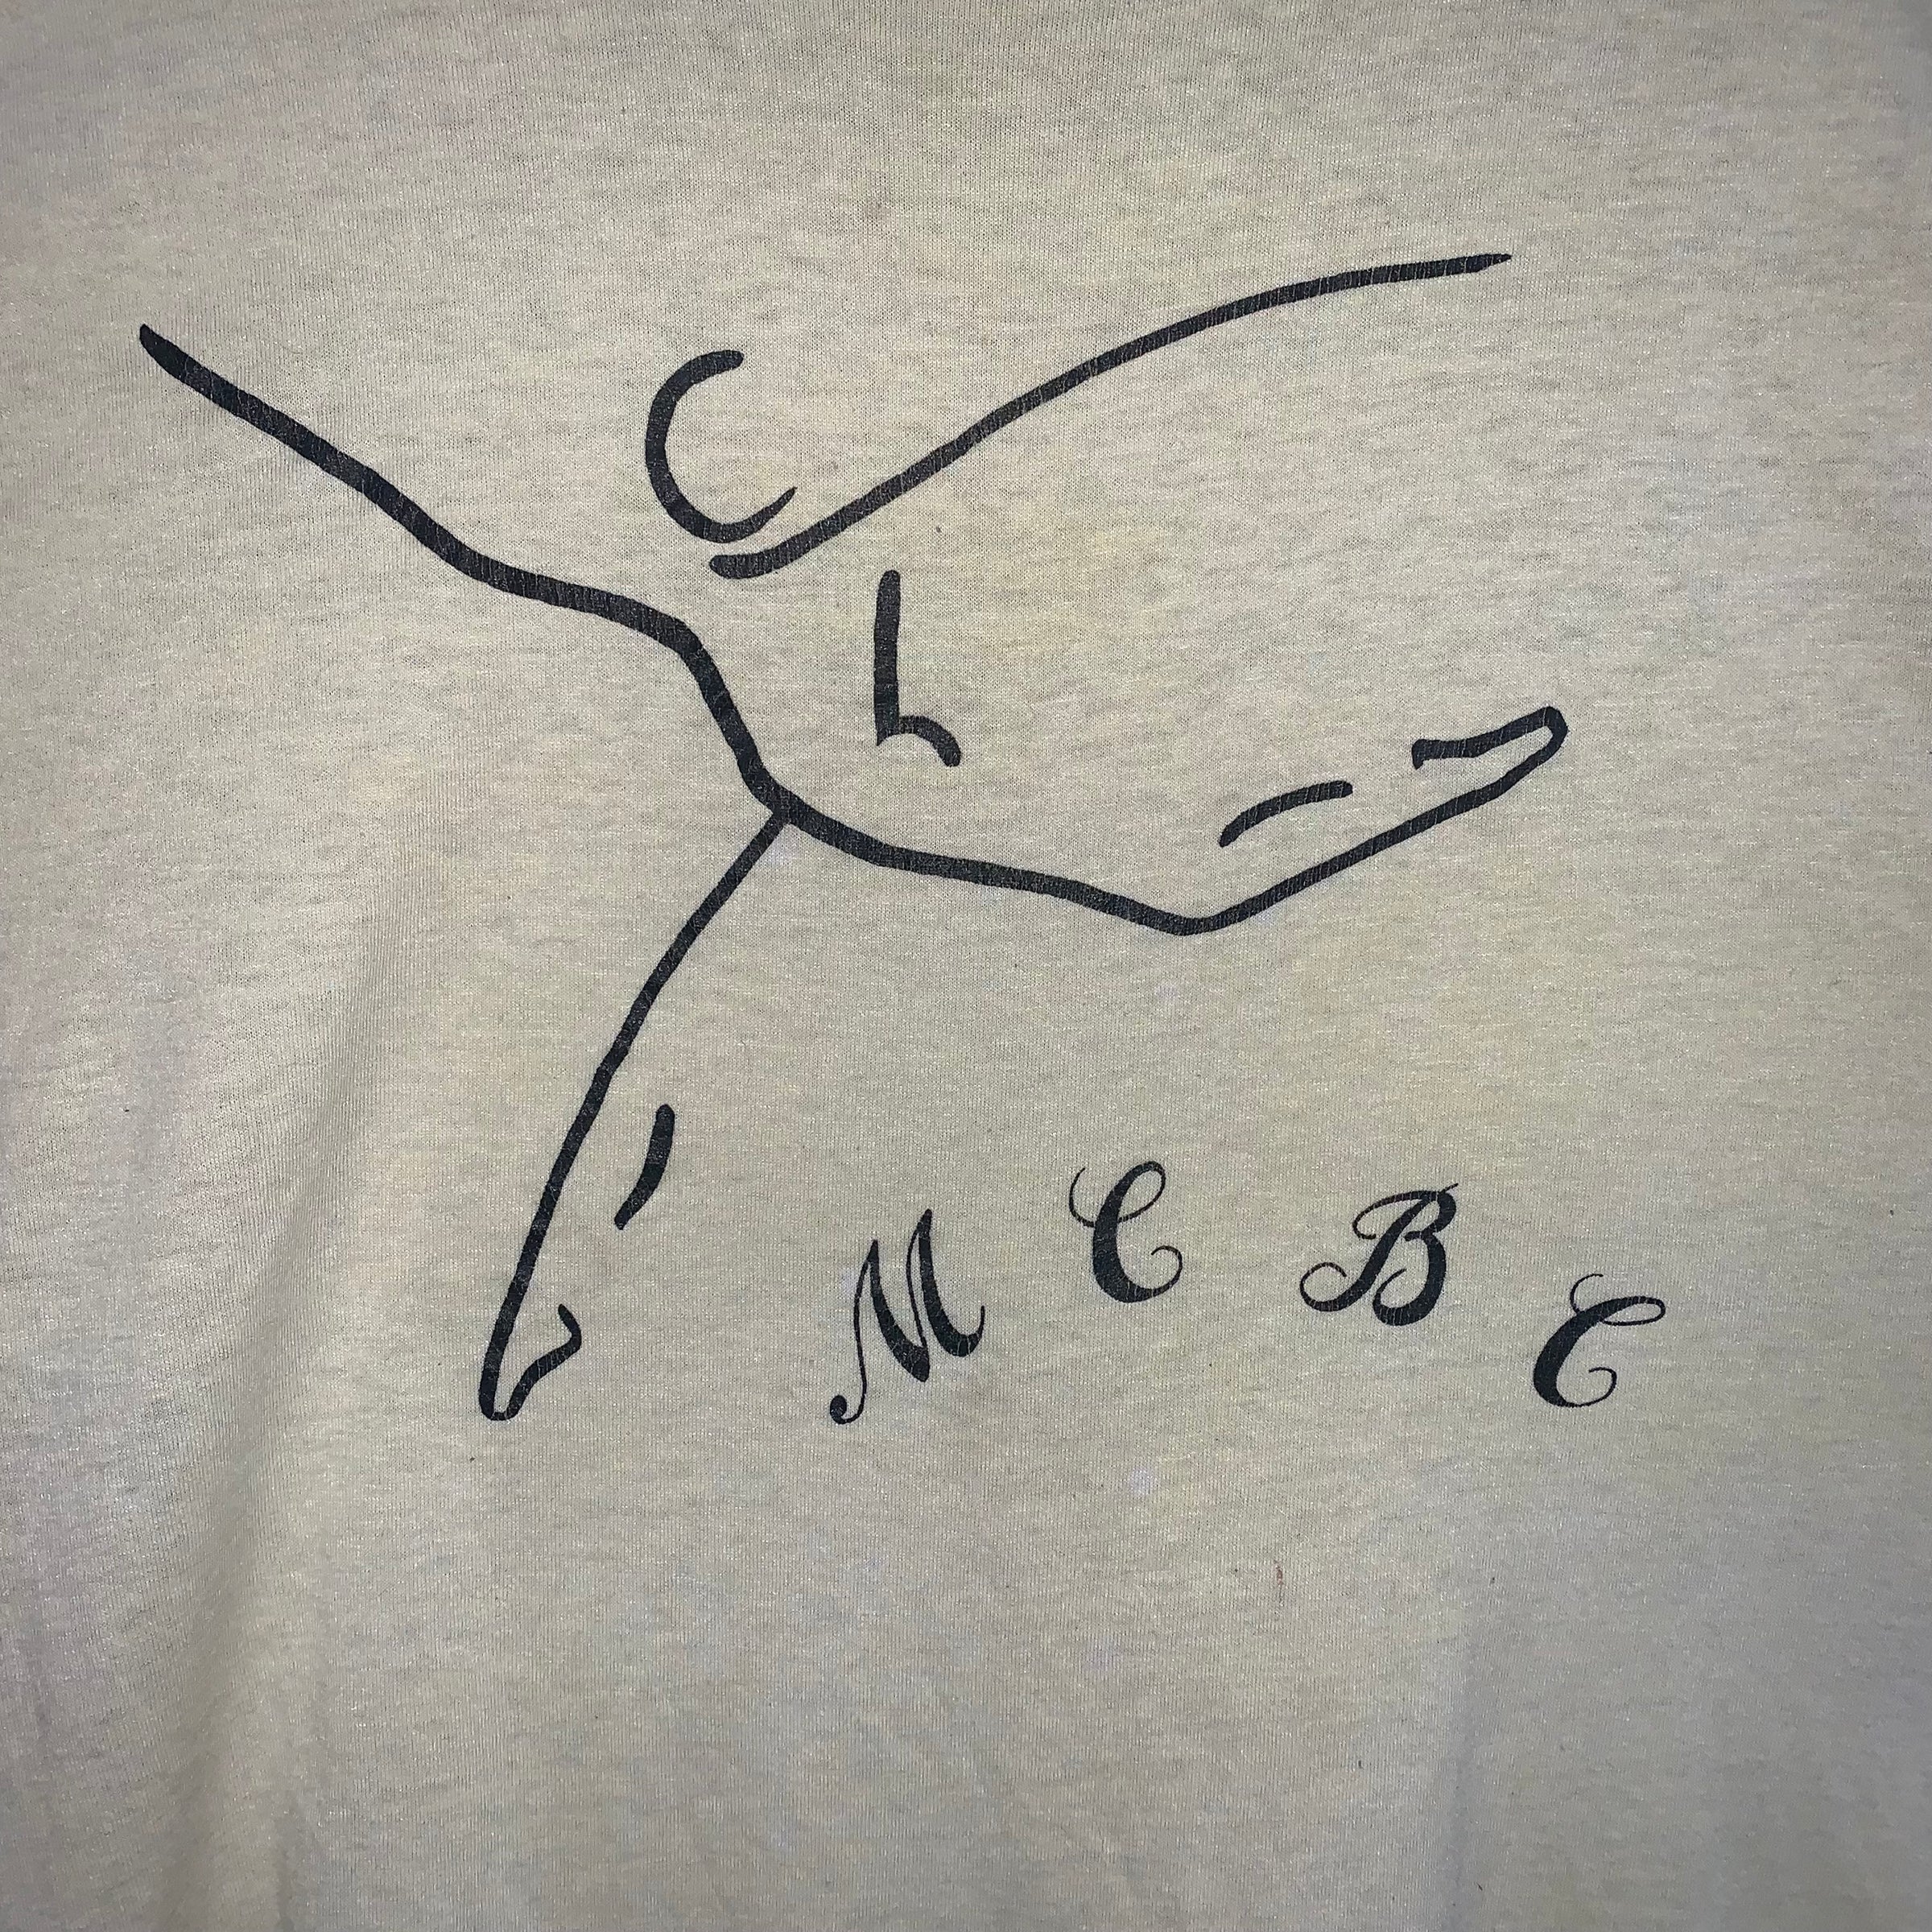 1980's Paper Thin Yellow MCBC Ballet T-Shirt Small